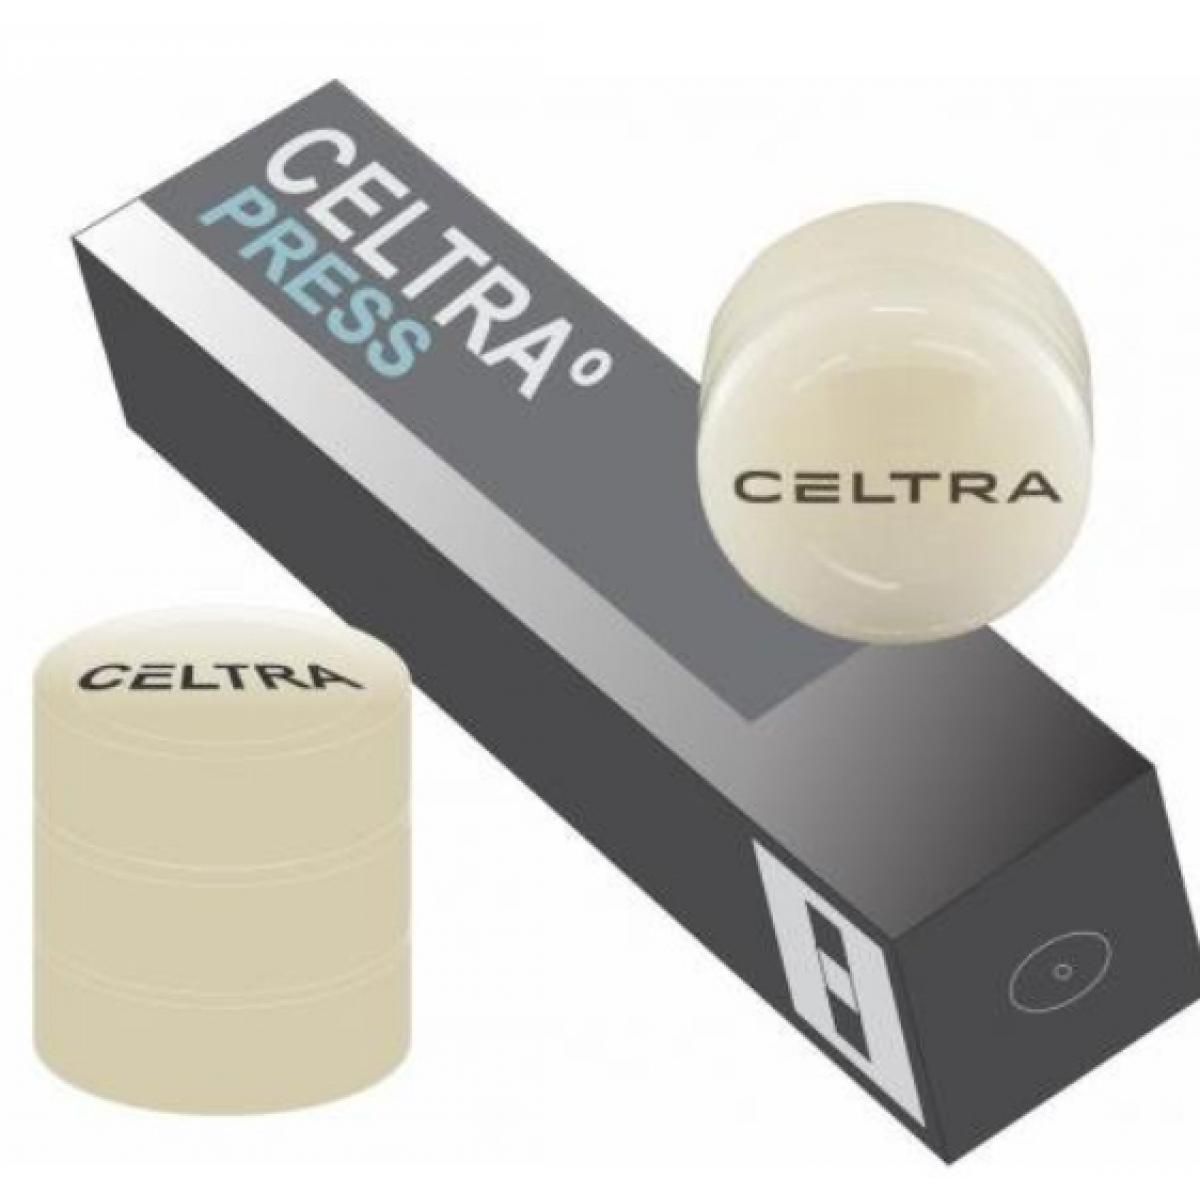 CELTRA PRESS MT B3 5 X 3 GR DENTSPLY -